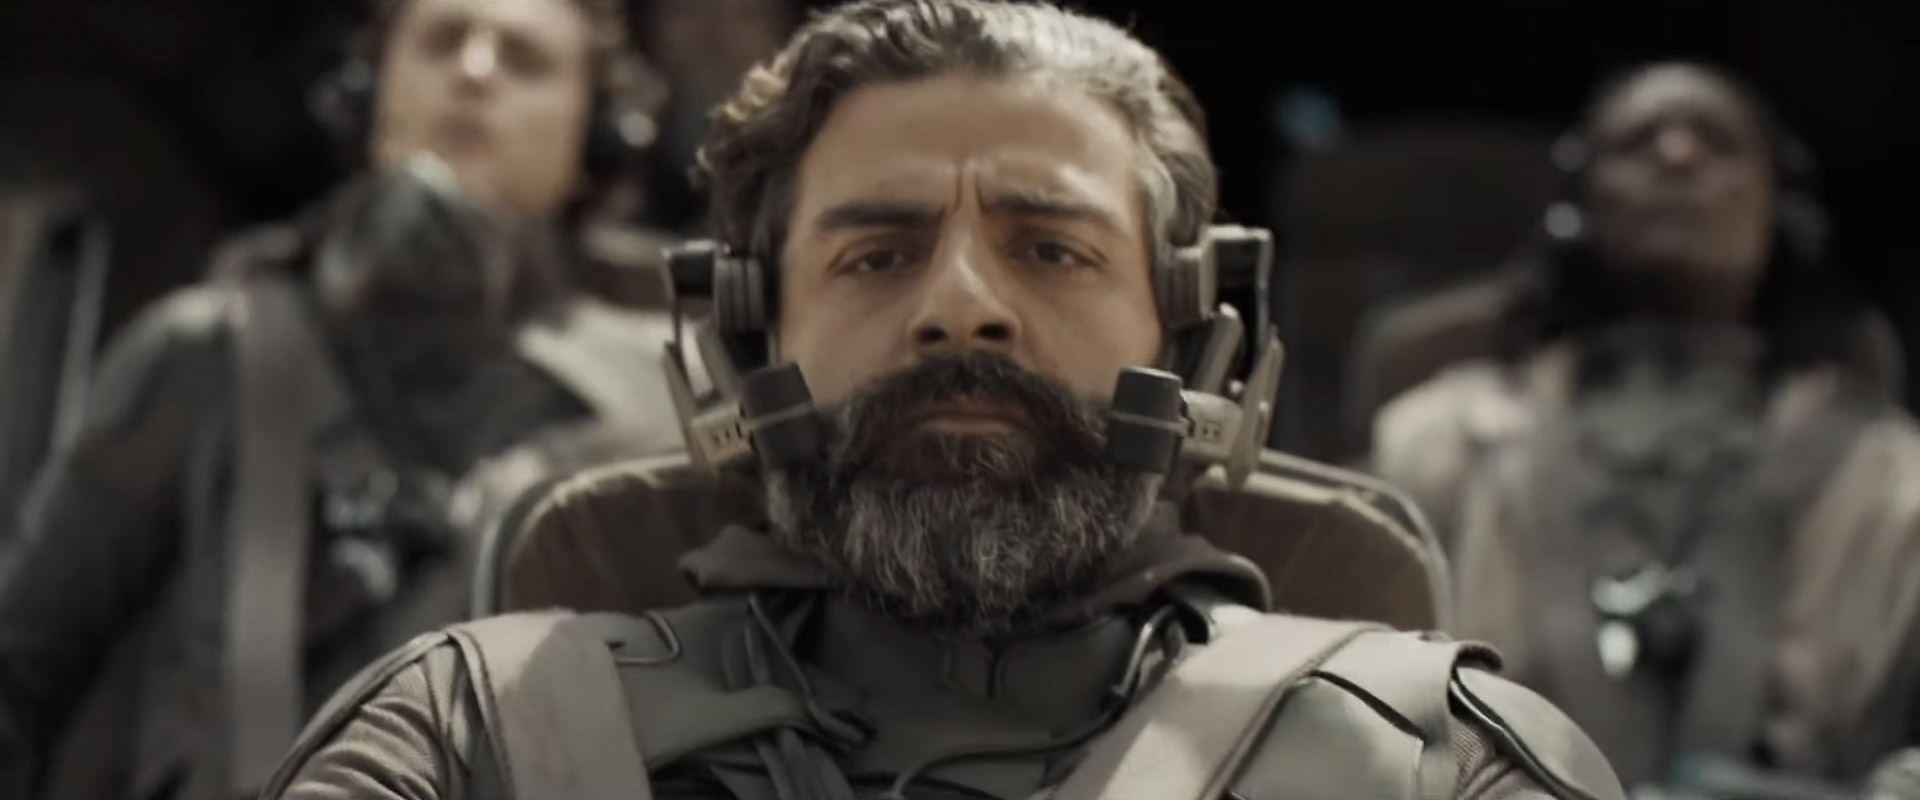 Duke Leto (Oscar Isaac) piloting an ornithopter in the Dune movie (2021).